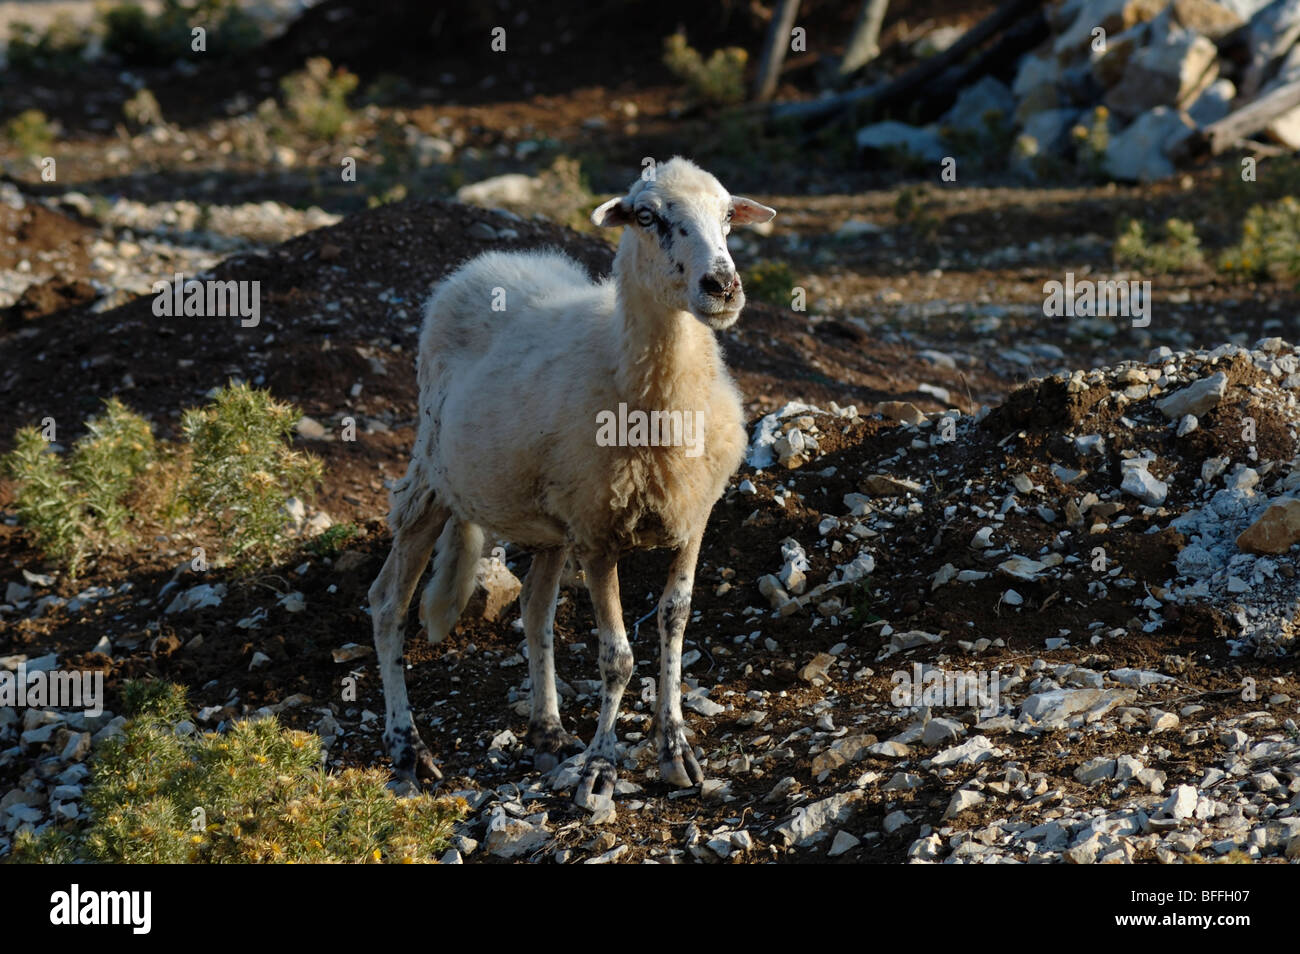 Full-length portrait of an ewe sheep, island Cres, Croatia, Europe Stock Photo